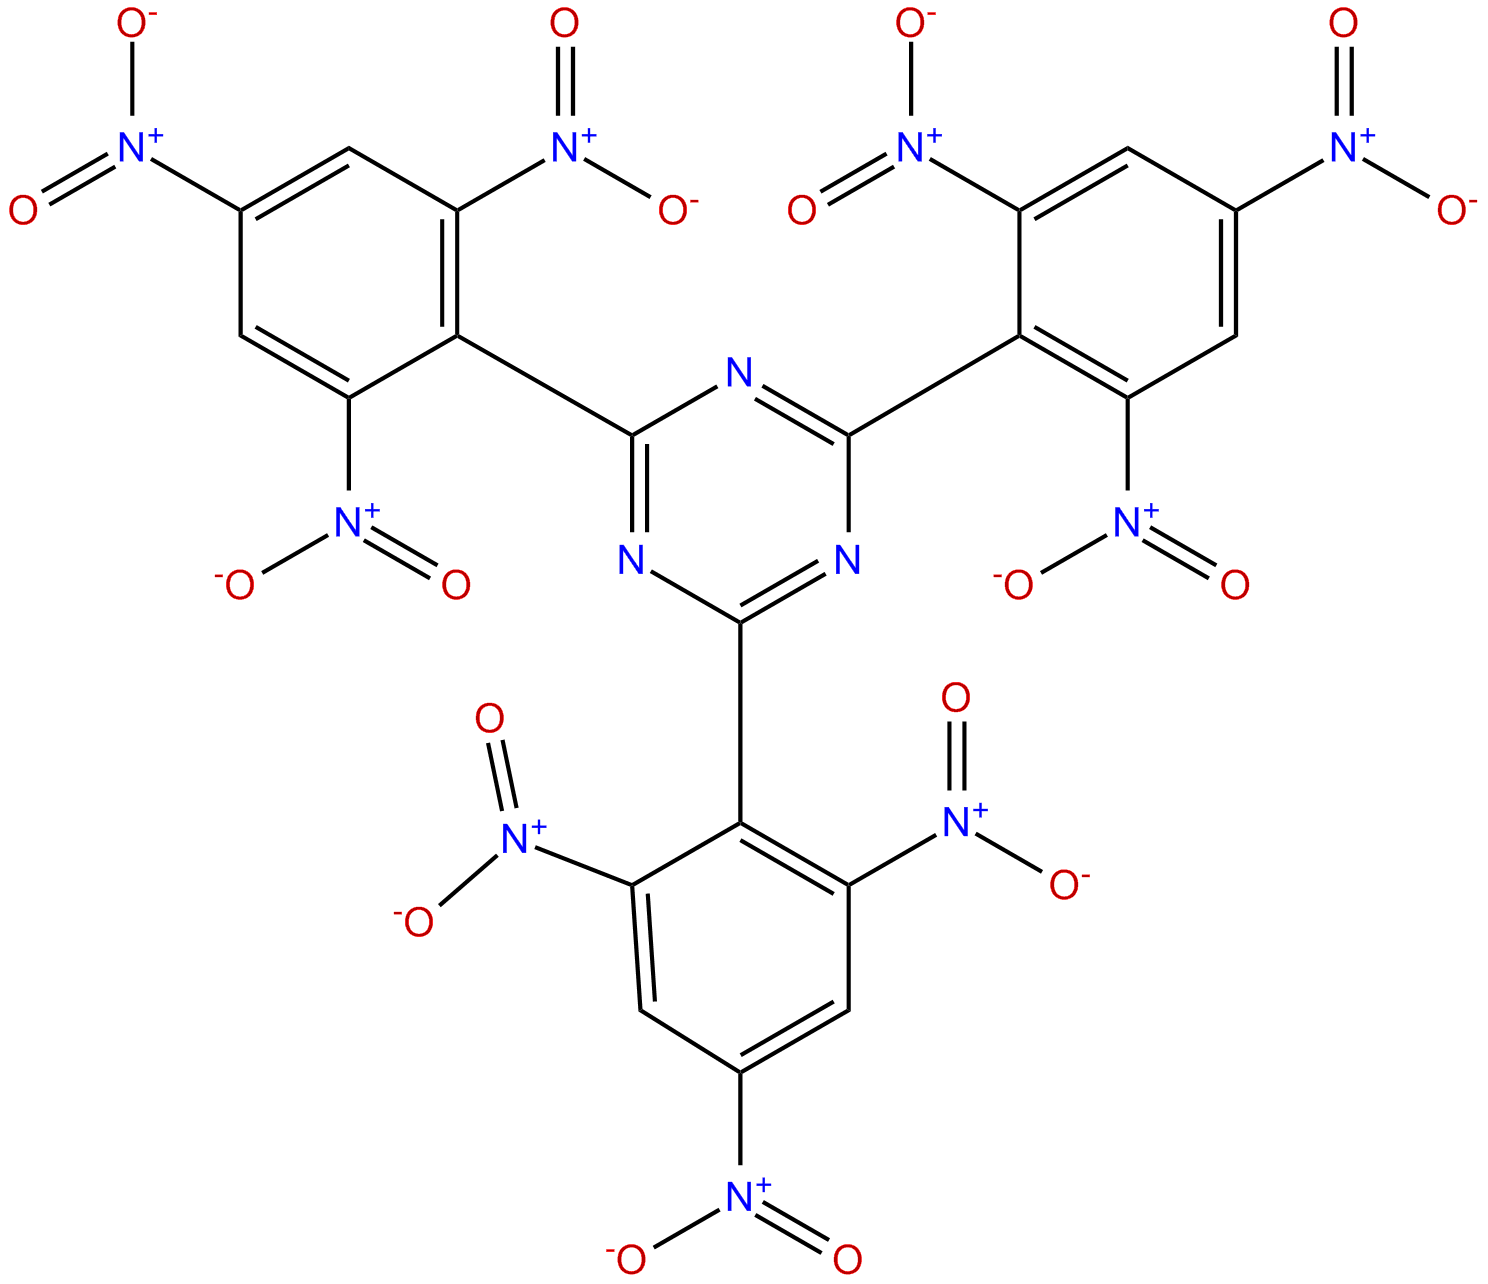 Image of 2,4,6-tris(2,4,6-trinitrophenyl)-1,3,5-triazine